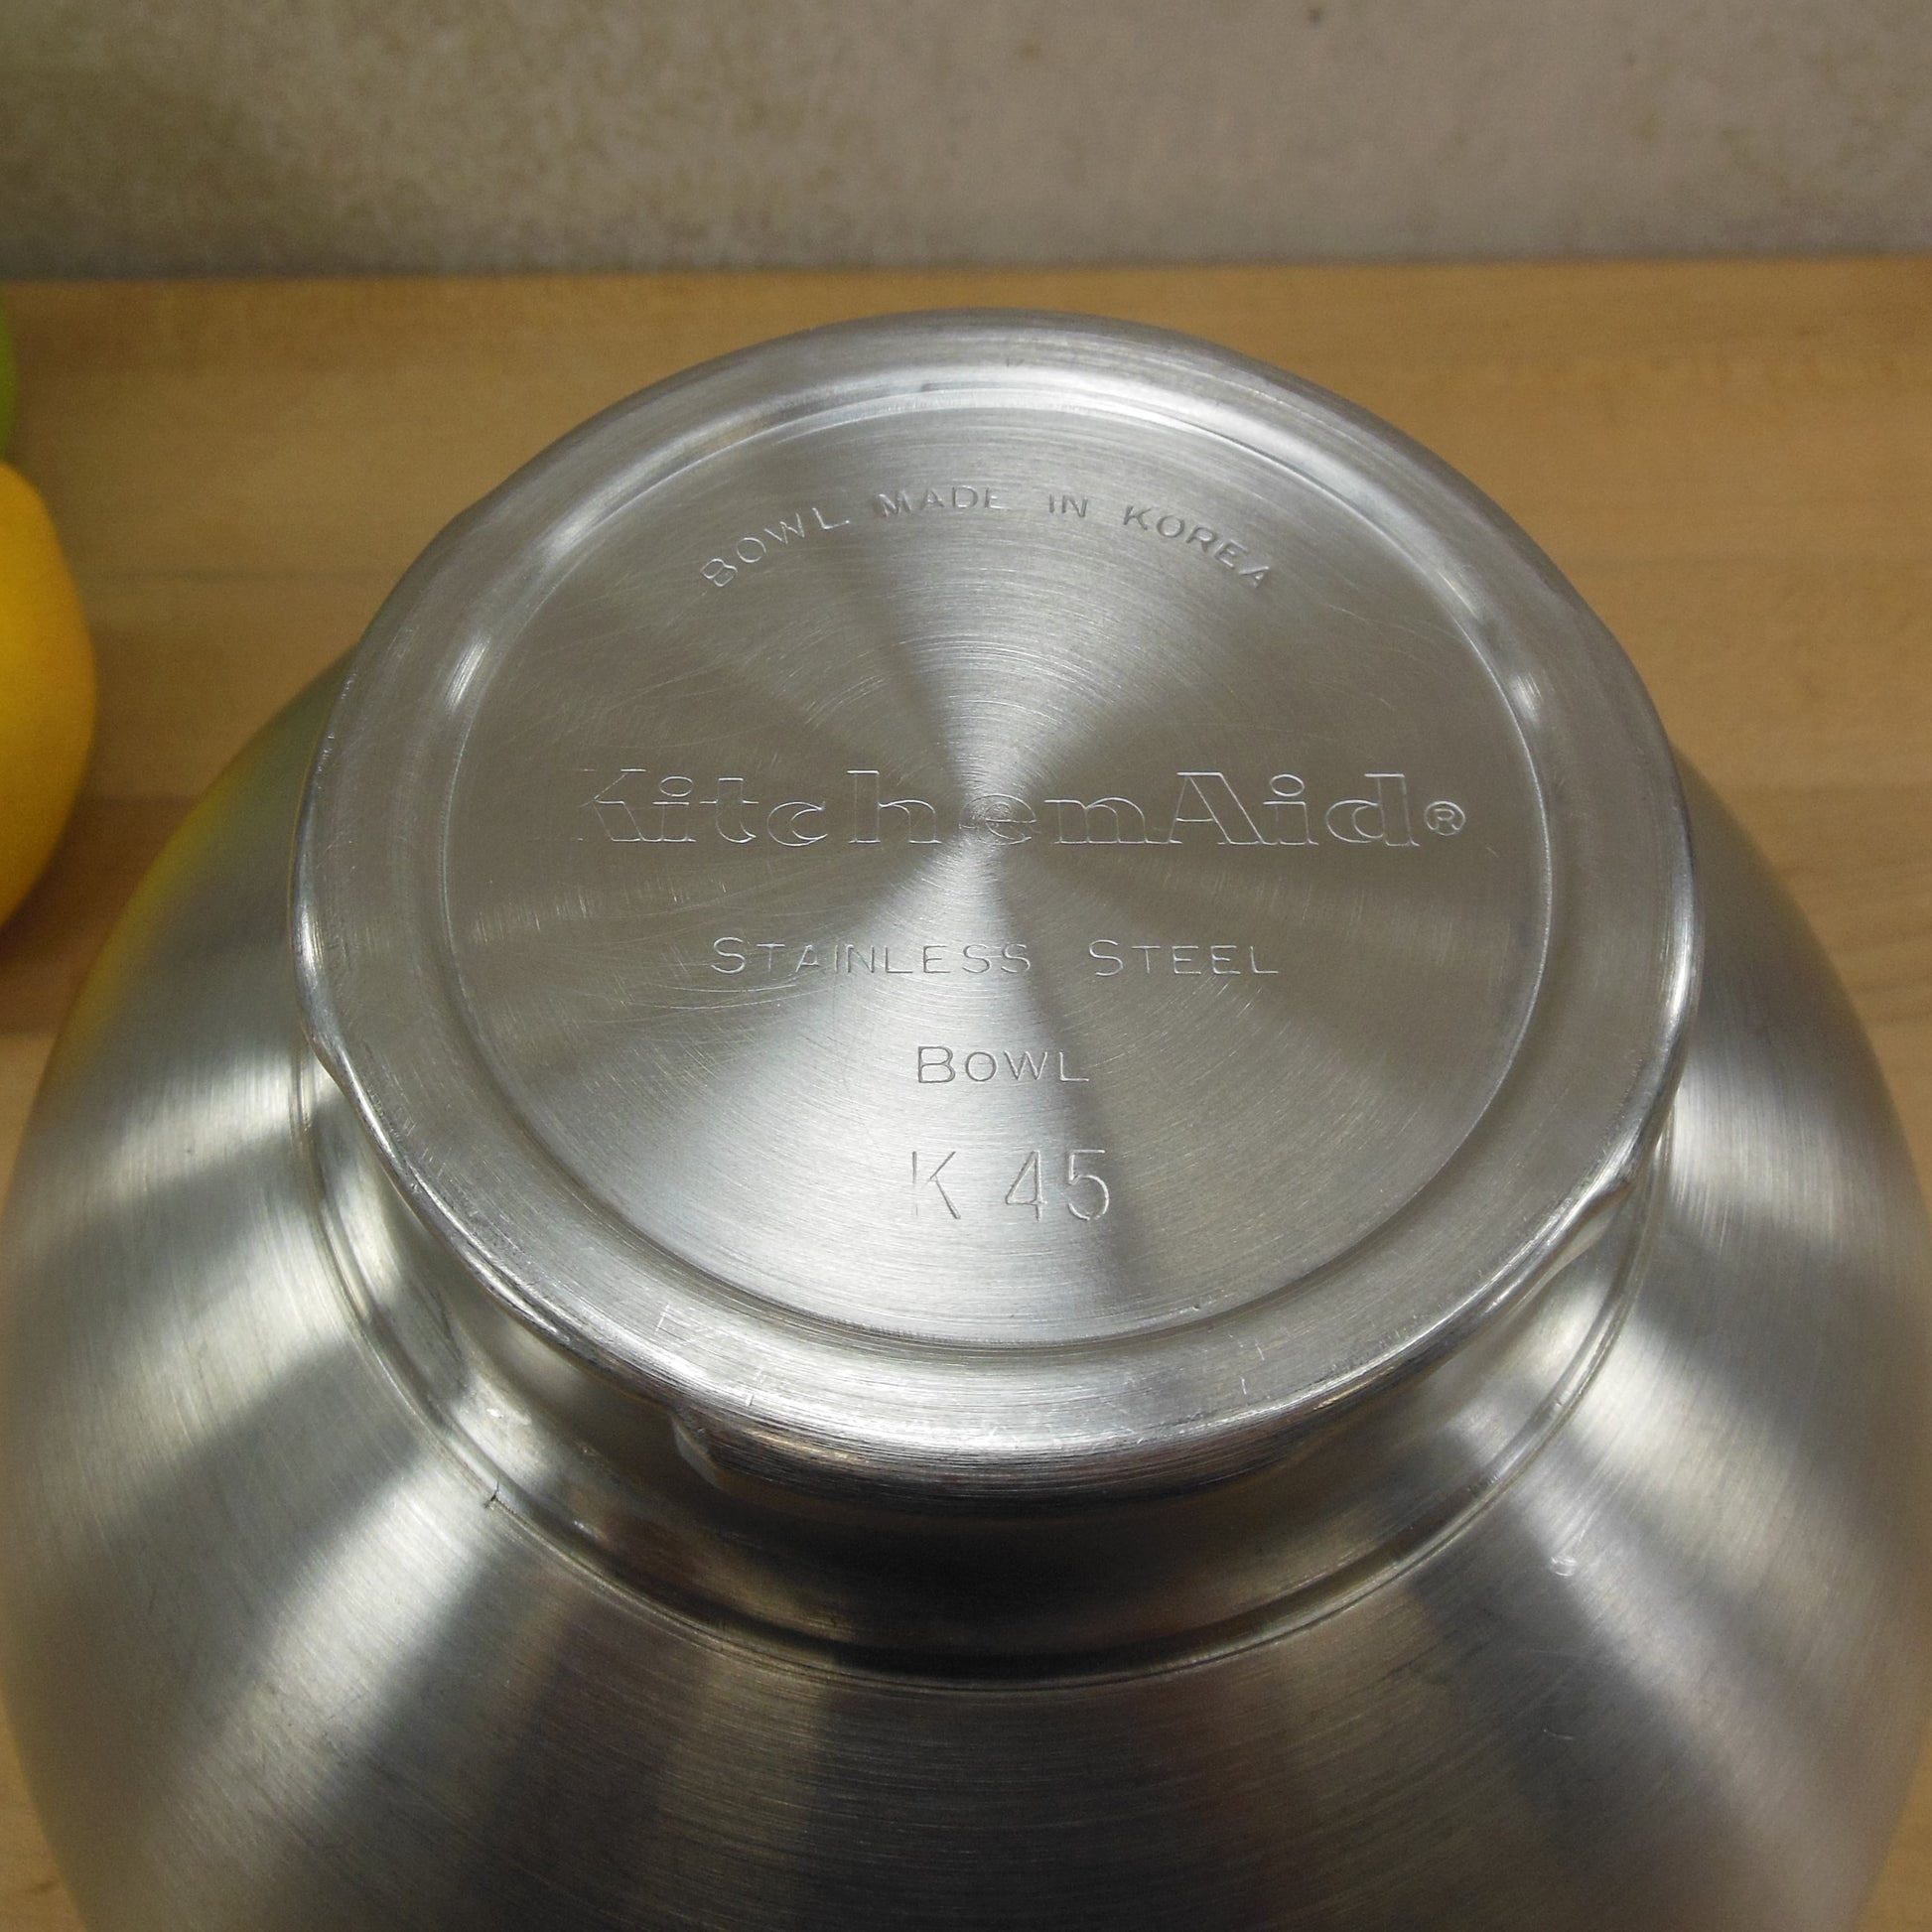 Vintage KitchenAid Copper Bowl Insert for 4.5 Quart Mixers, K45